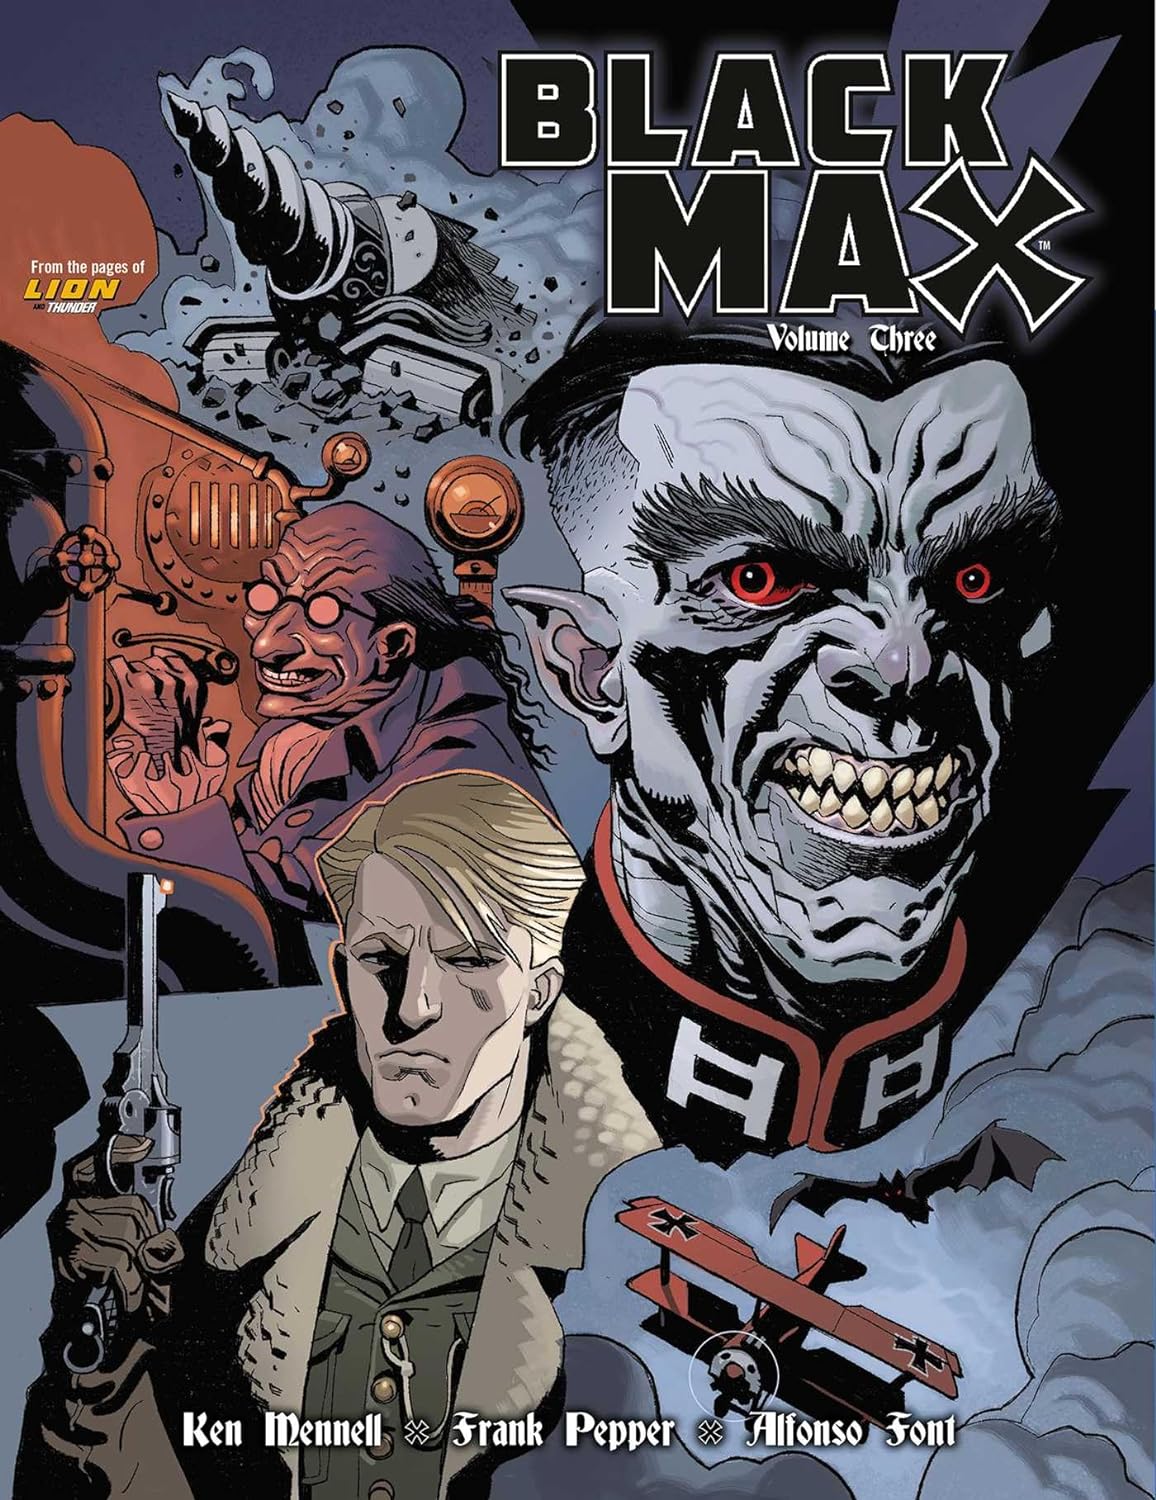 Black Max Volume Three by Ken Mennell, Frank Pepper, et al. (2024)